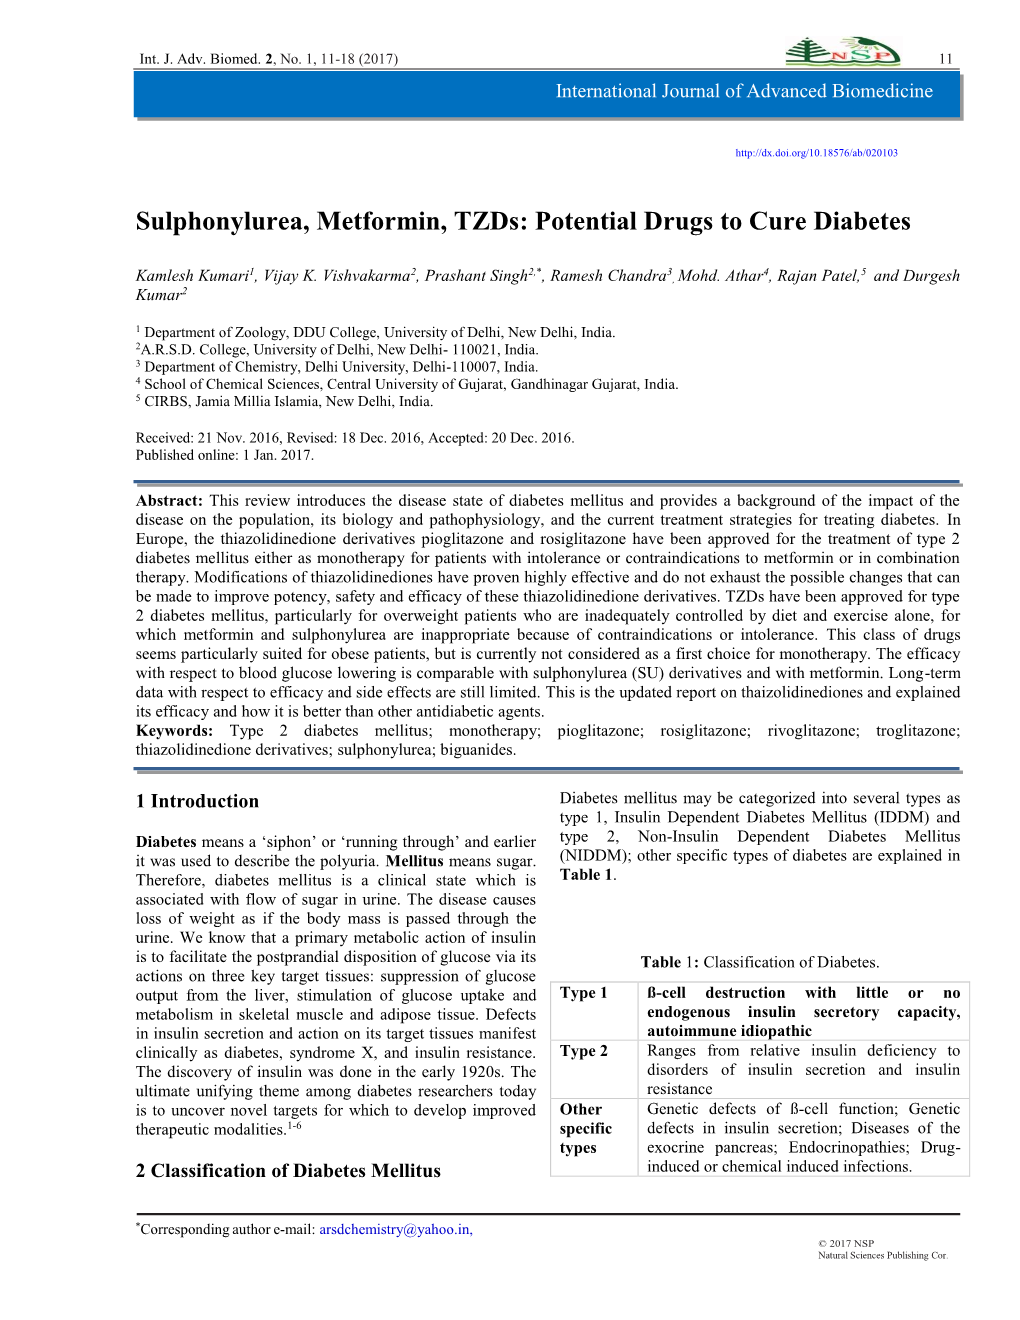 Sulphonylurea, Metformin, Tzds: Potential Drugs to Cure Diabetes